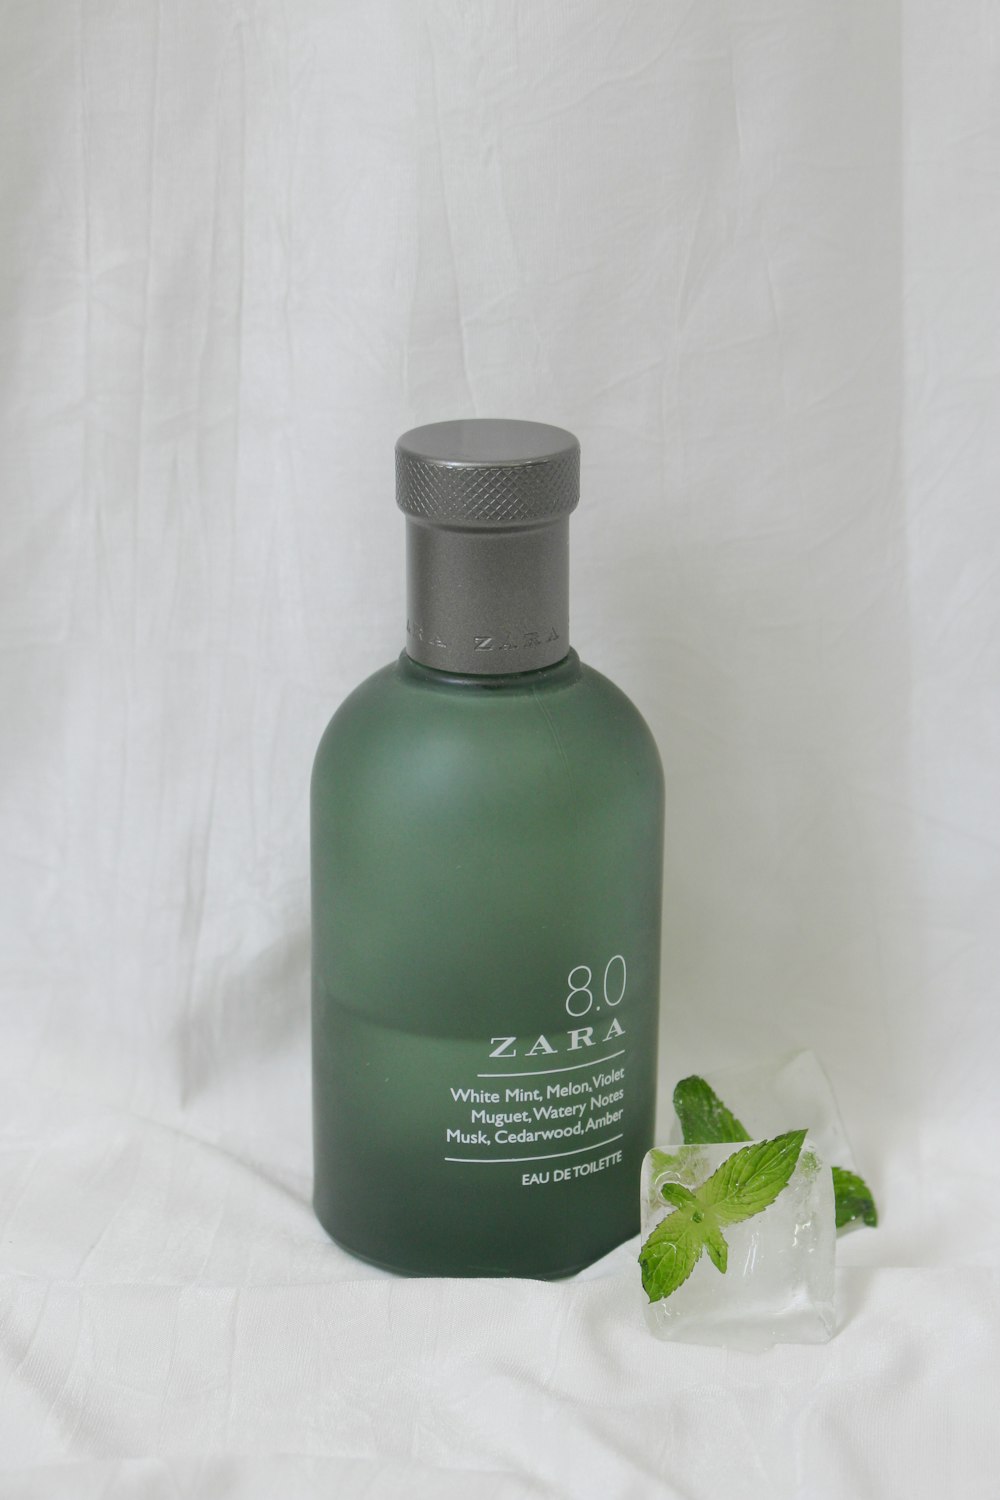 green and black plastic bottle photo – Free Zara Image on Unsplash